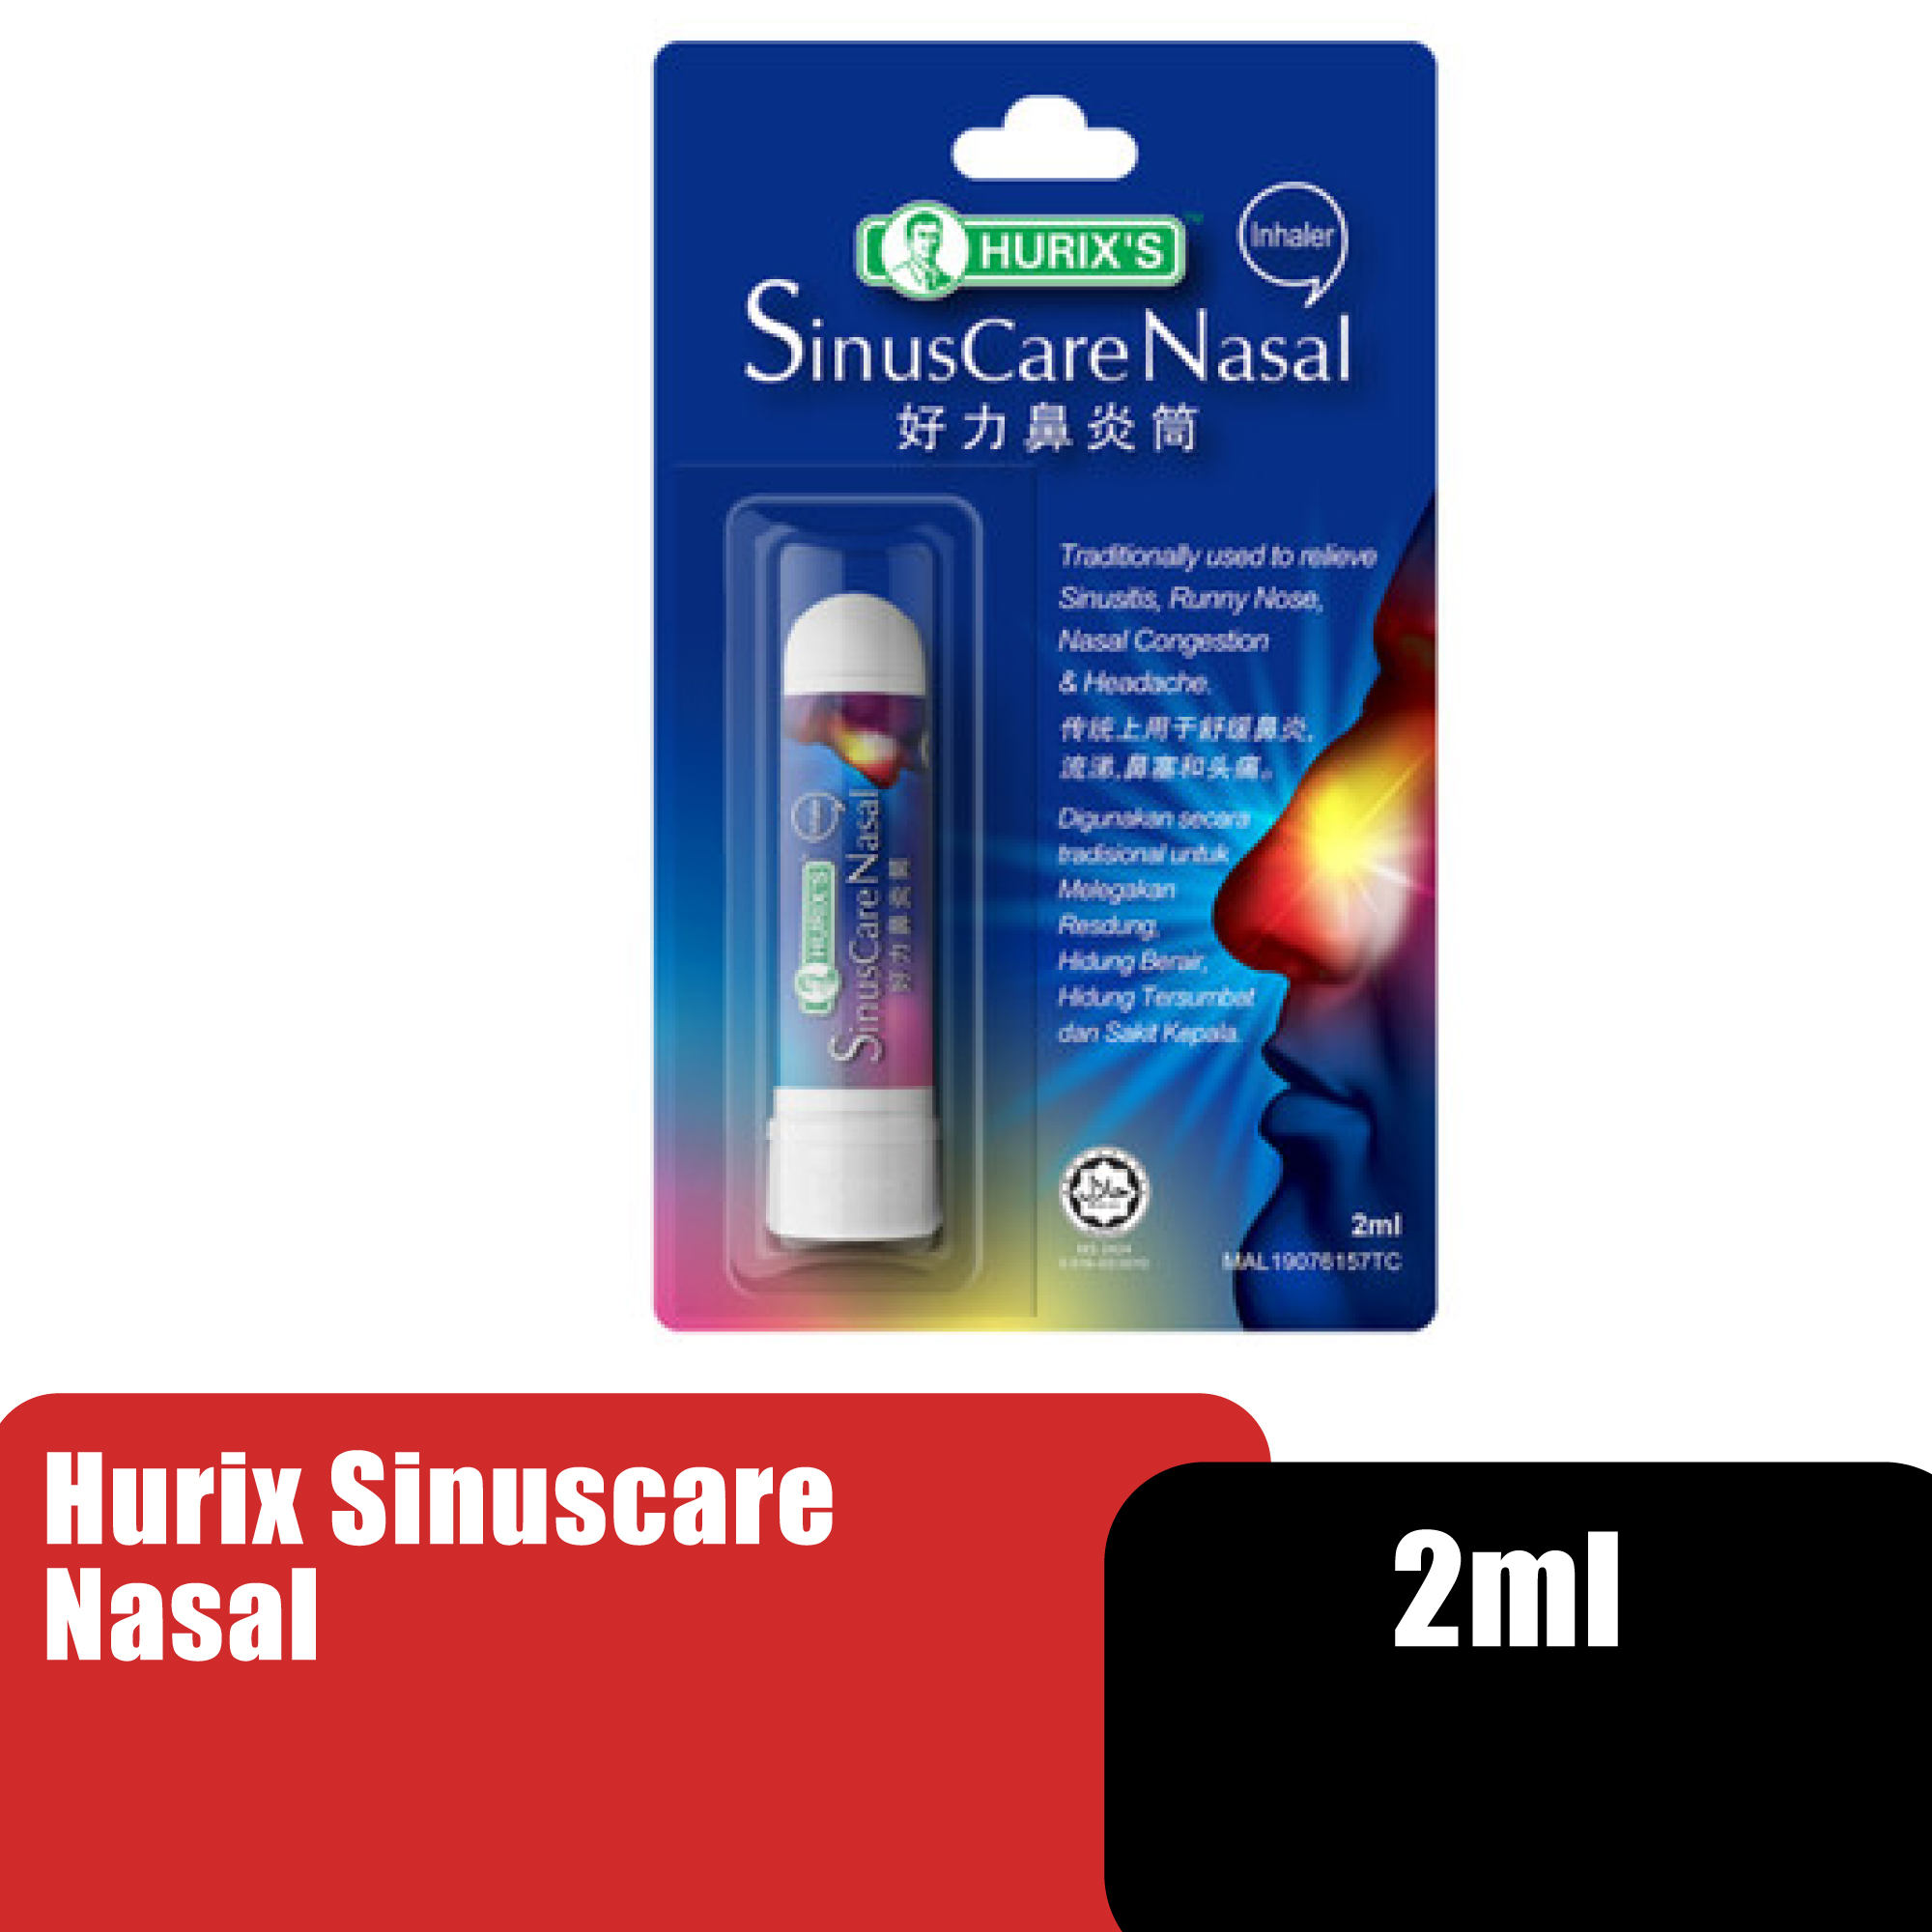 Hurix's Sinuscare Nasal Inhaler 2ml - Relief for runny nose block / headache/ nasal congestion ( Inhaler hidung)